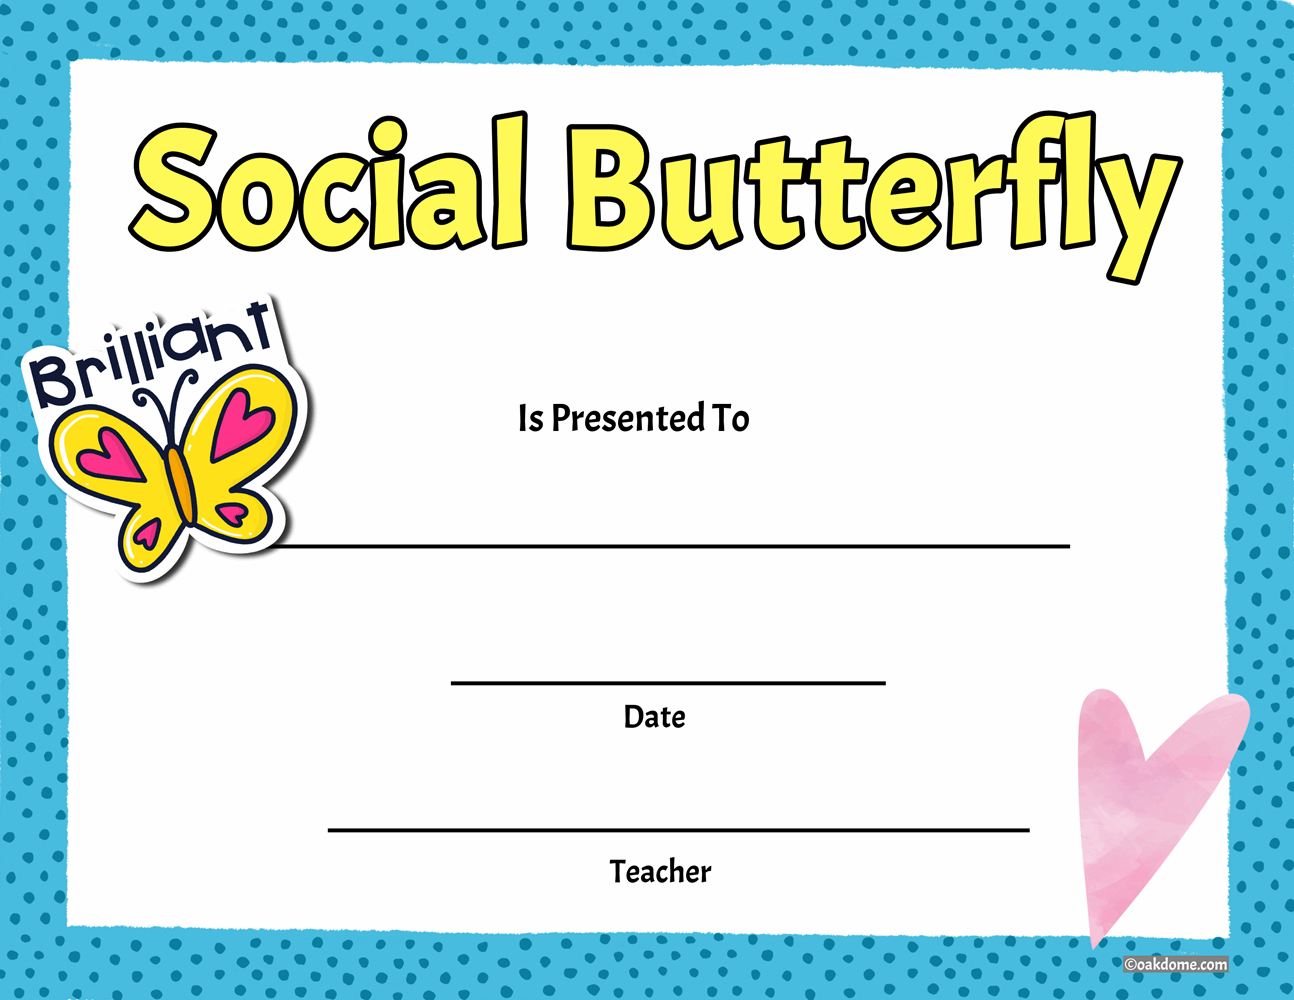 Free, Fast Student Award Generator | Social Butterfly Award